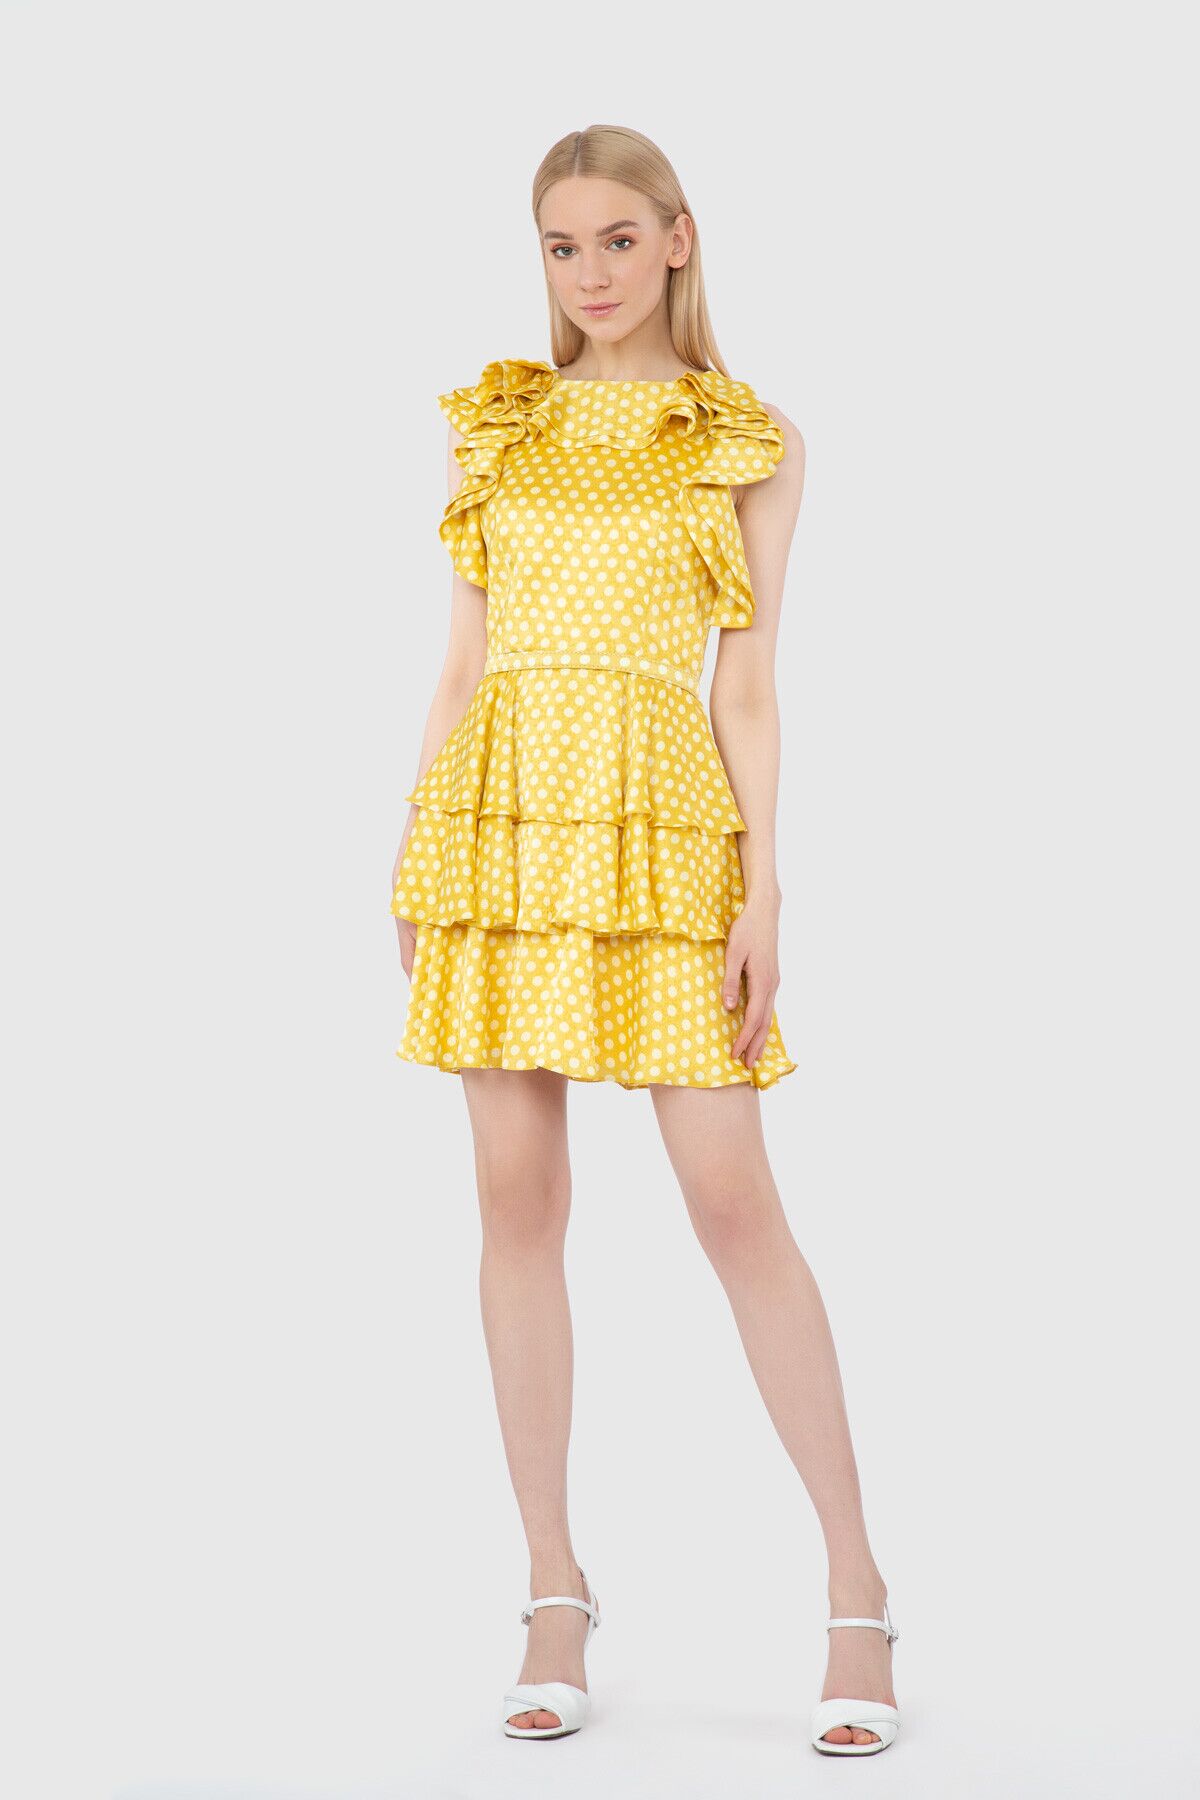 GIZIA - Ruffle Detailed Yellow Dress